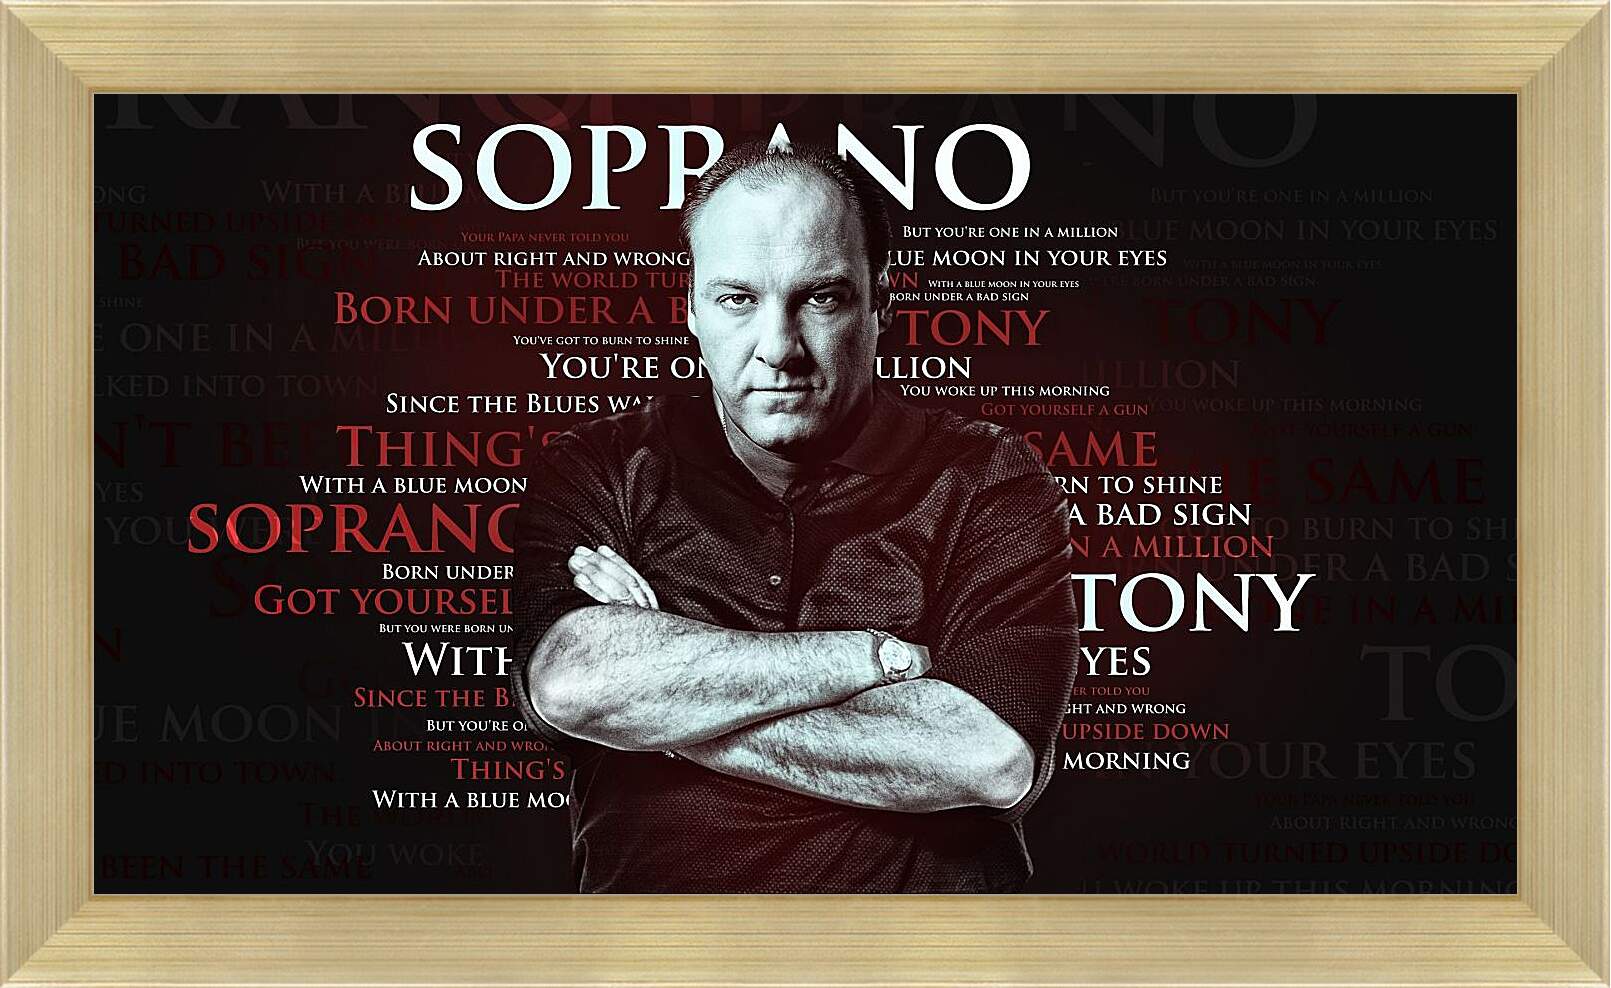 Картина в раме - Клан Сопрано. The Sopranos